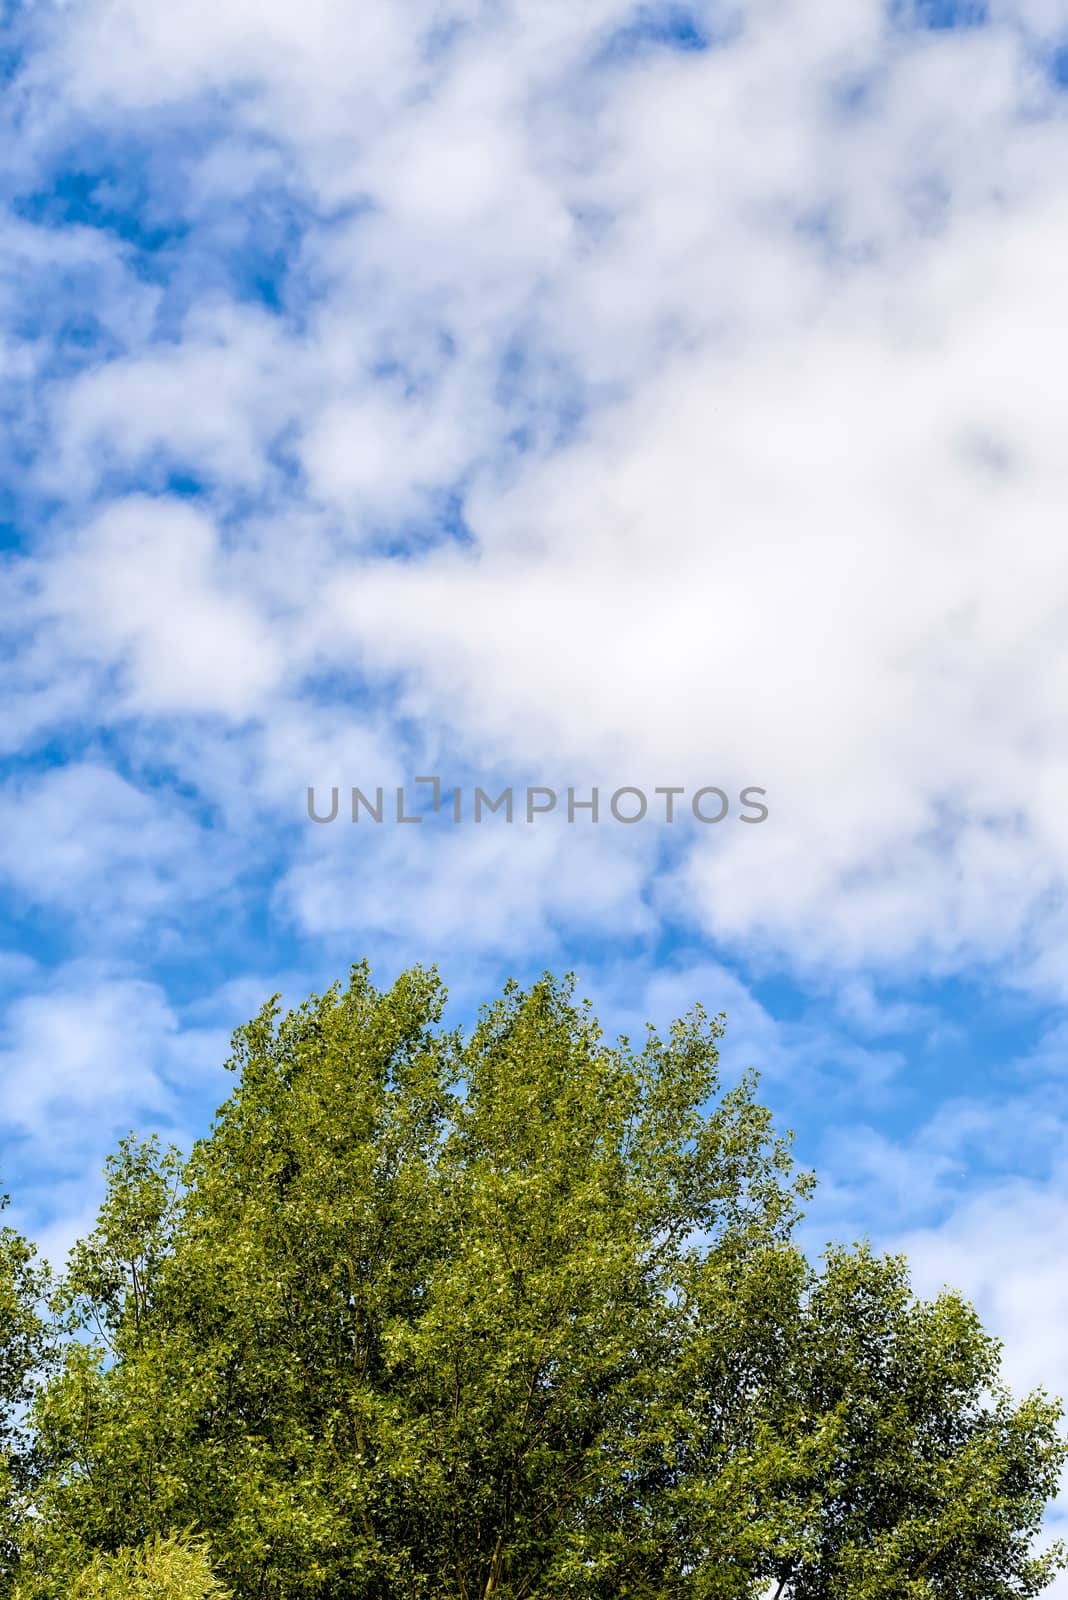 Cloudy Sky Over the trees by MaxalTamor